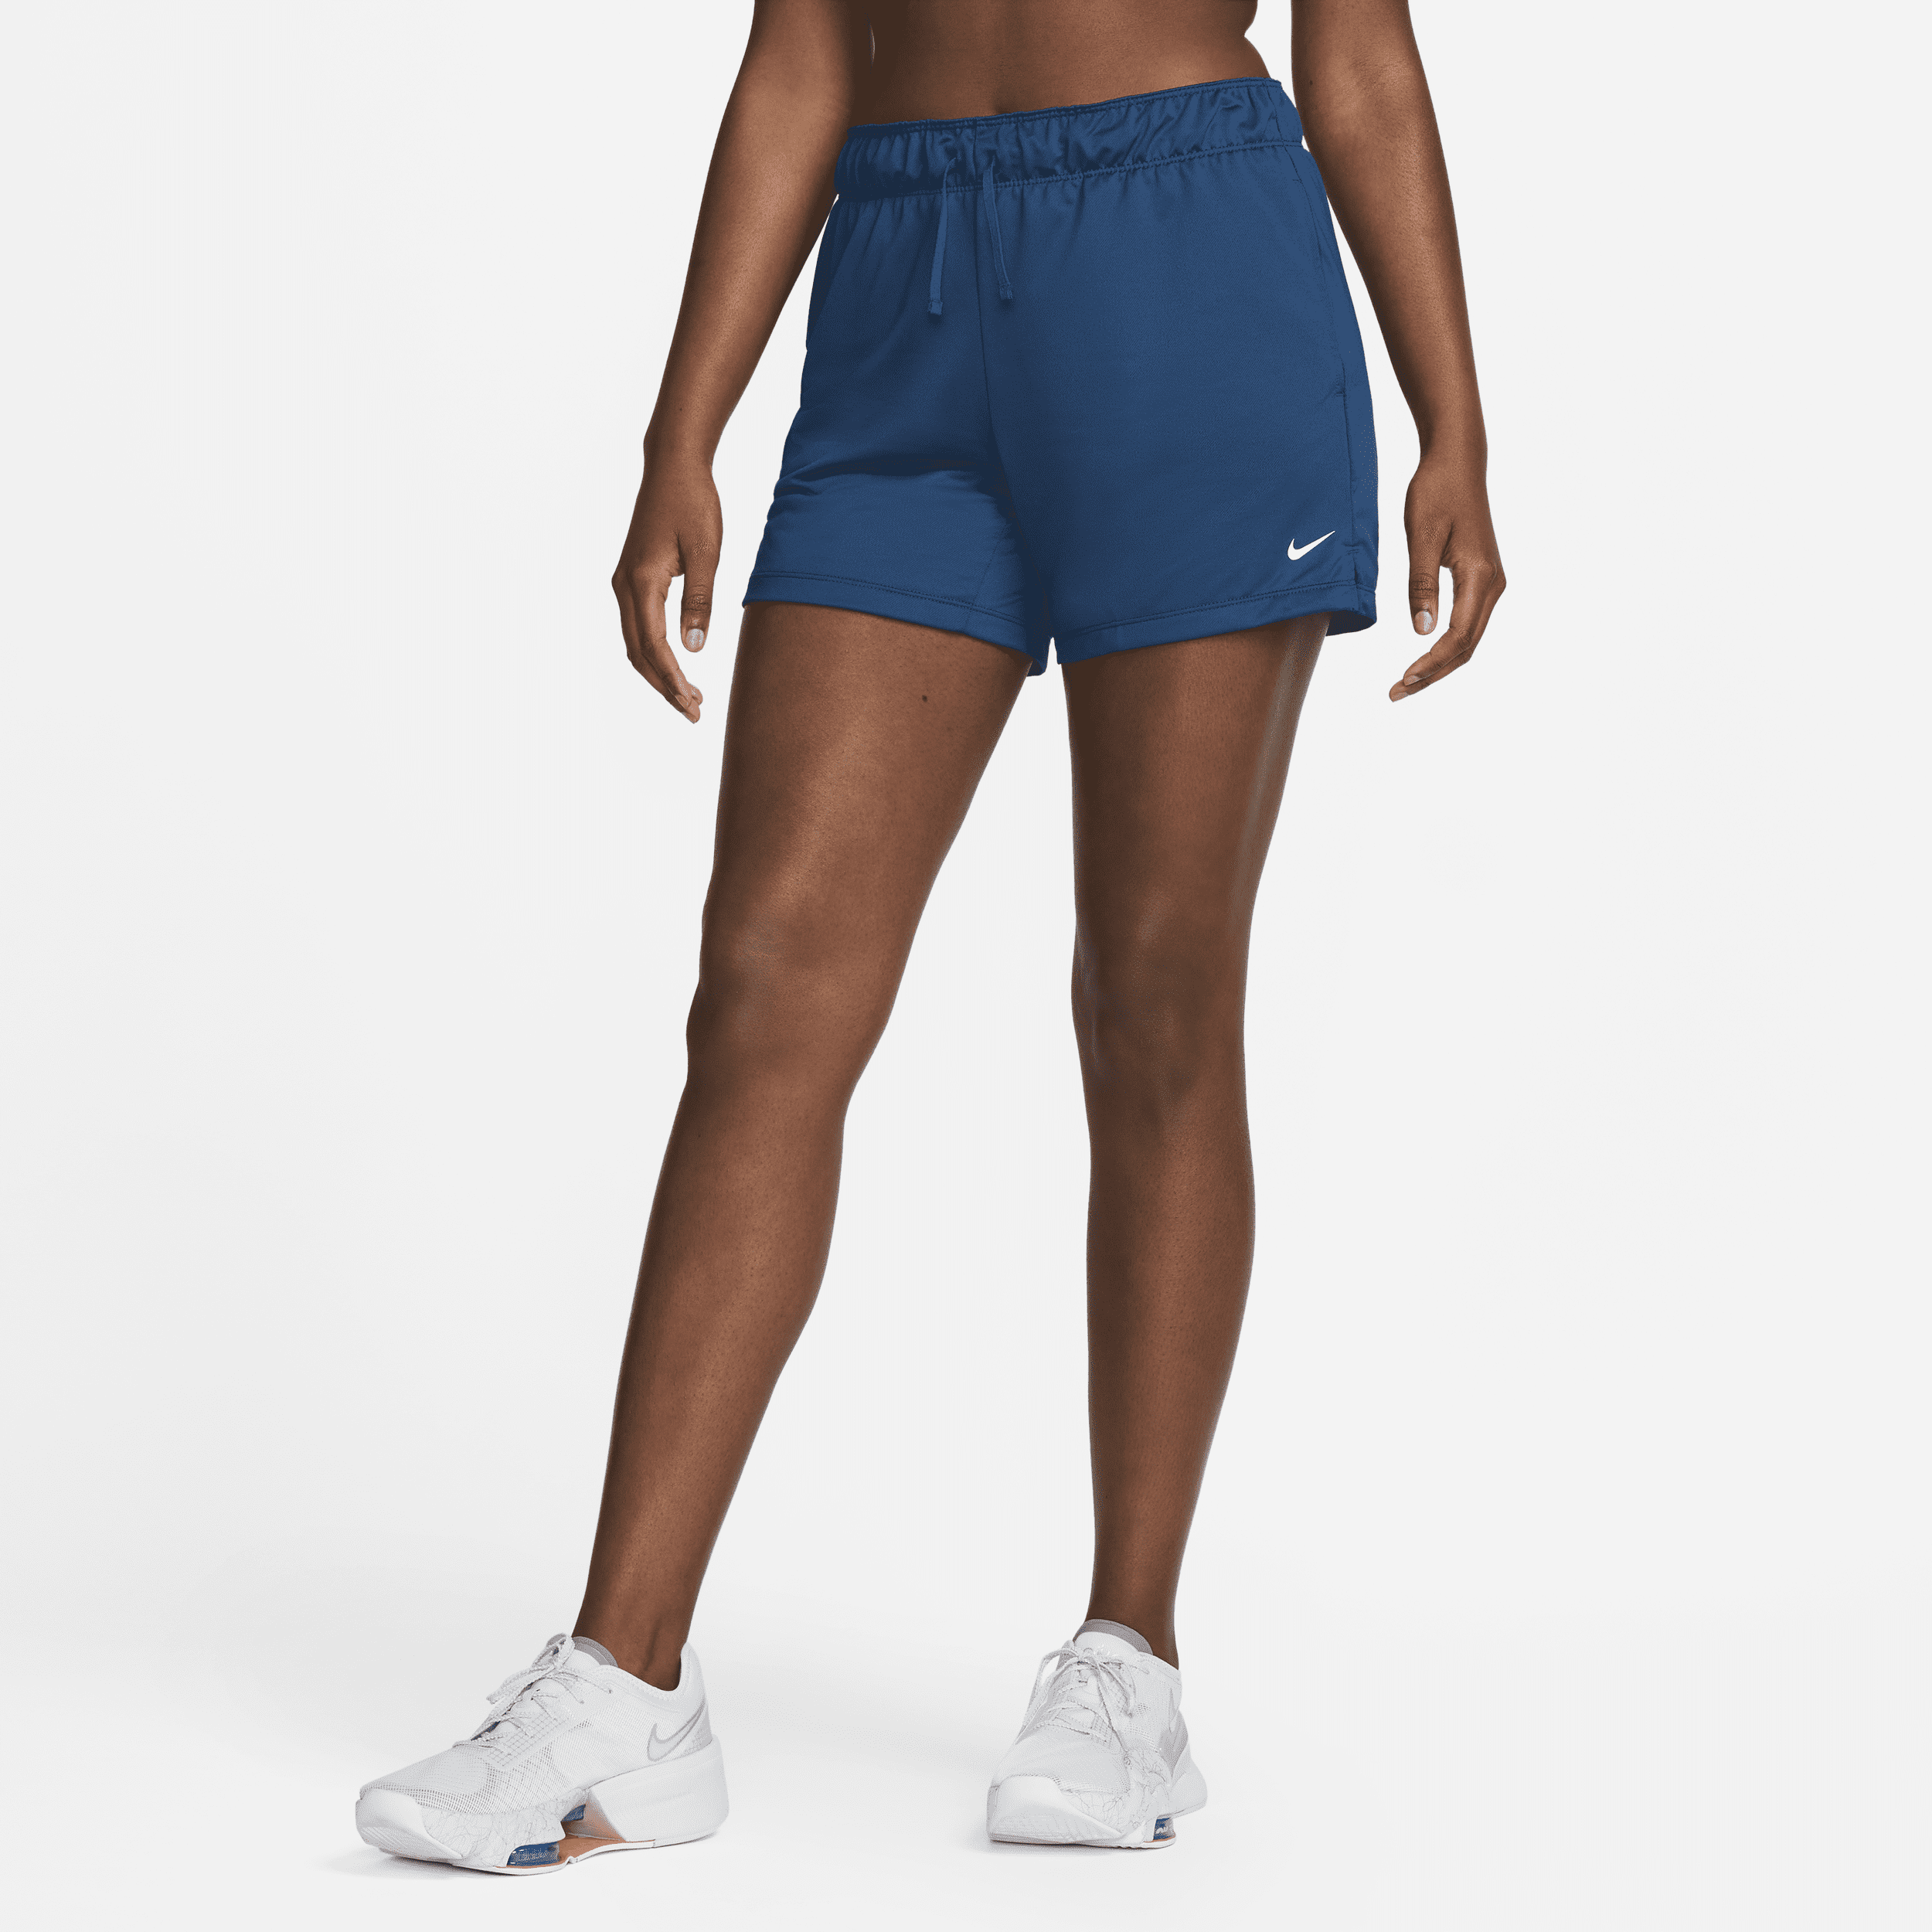 Nike Women's Dri-fit Attack Training Shorts In Blue